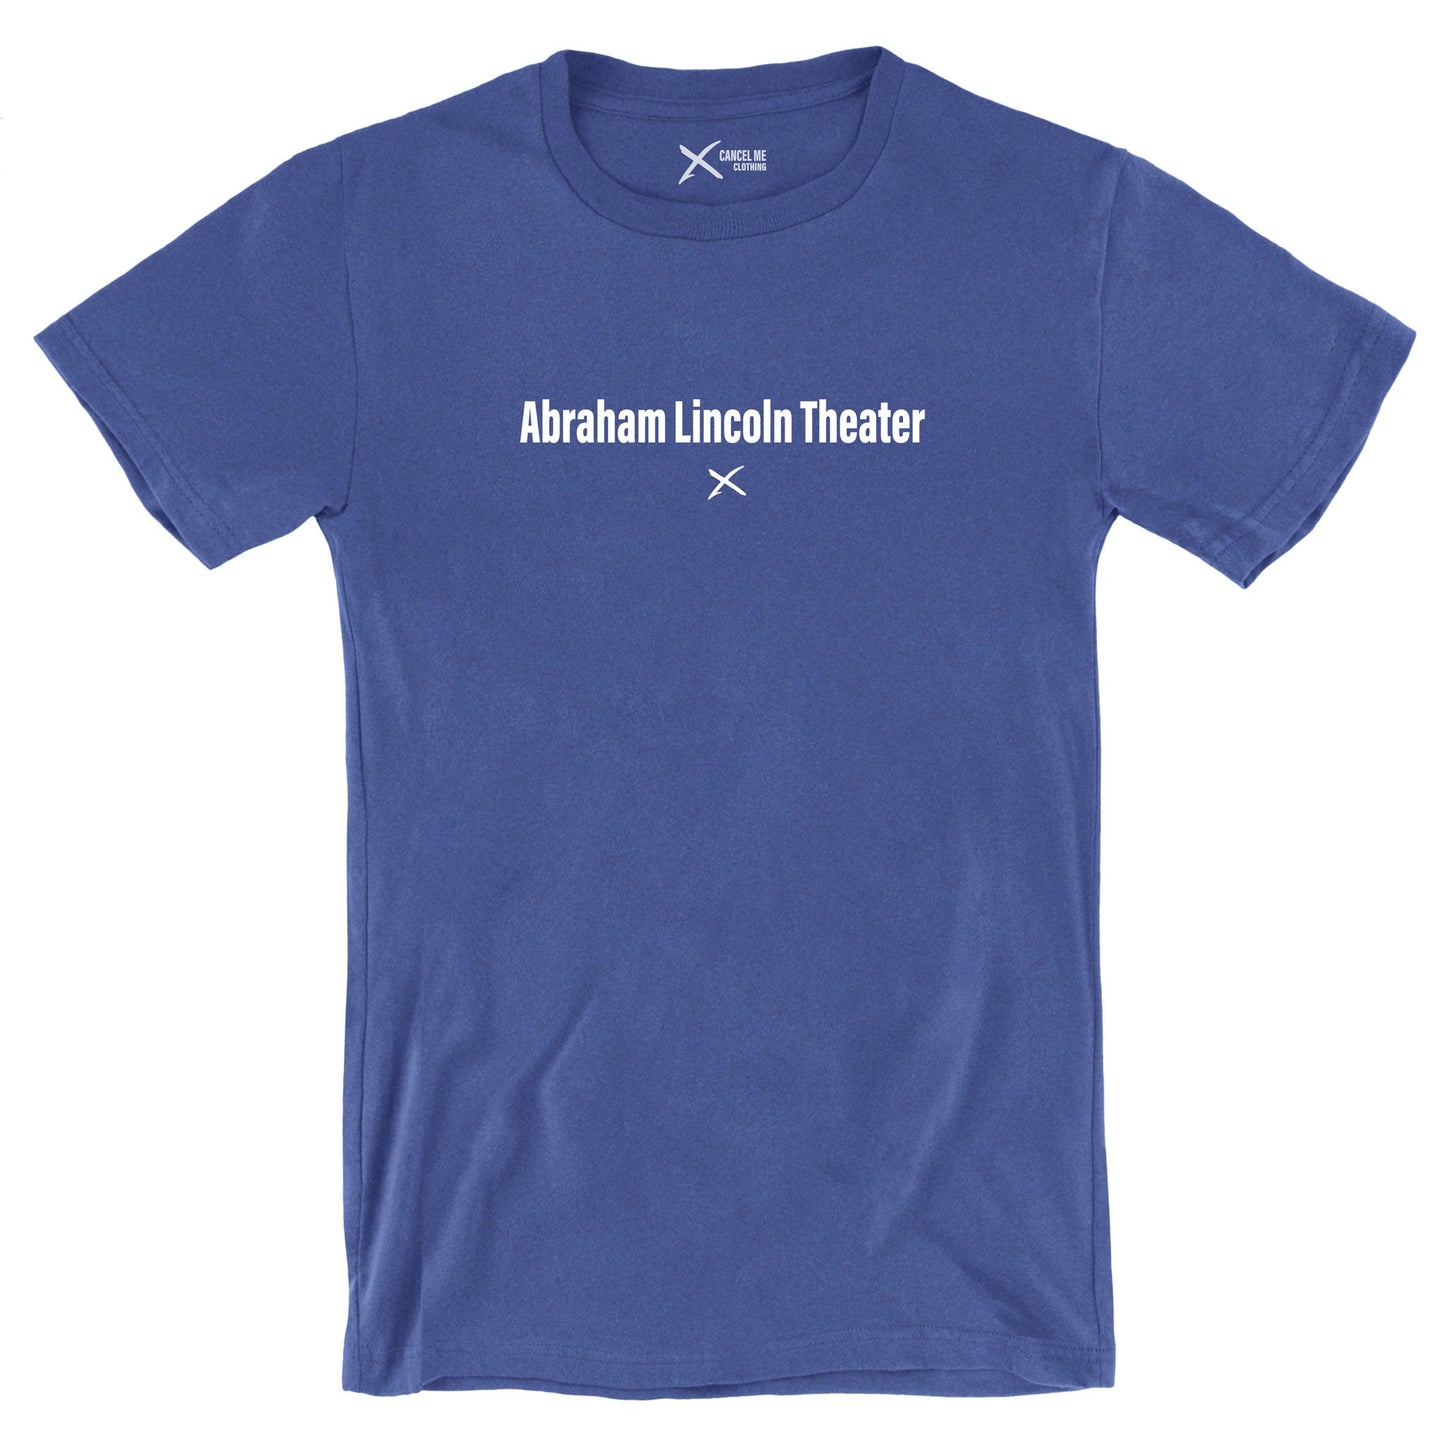 Abraham Lincoln Theater - Shirt